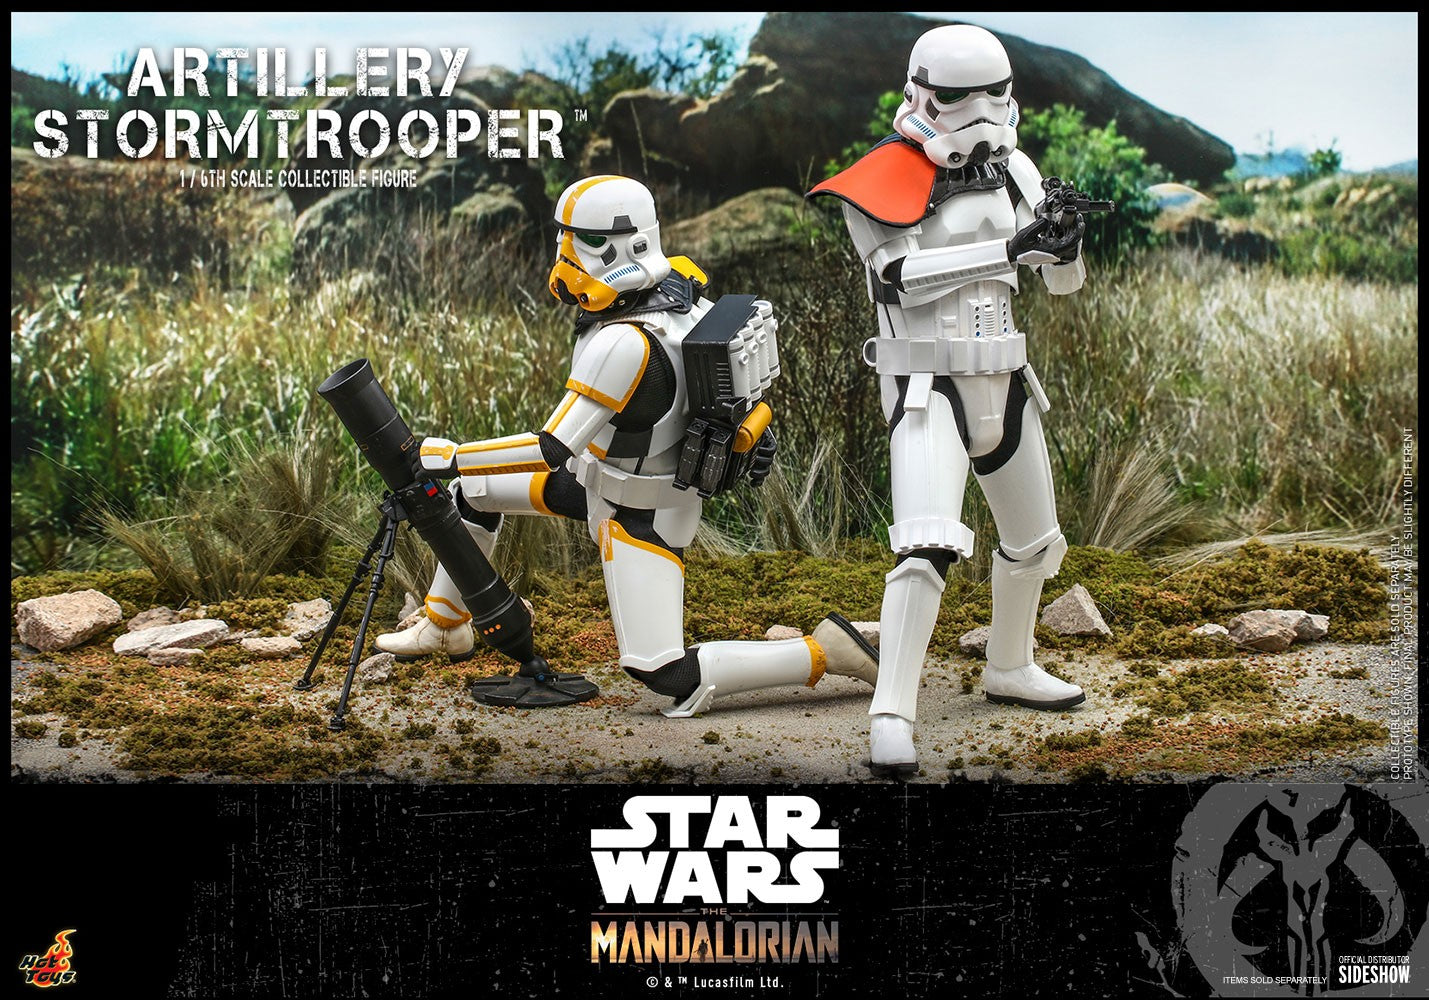 Artillery Stormtrooper - Star Wars: The Mandalorian